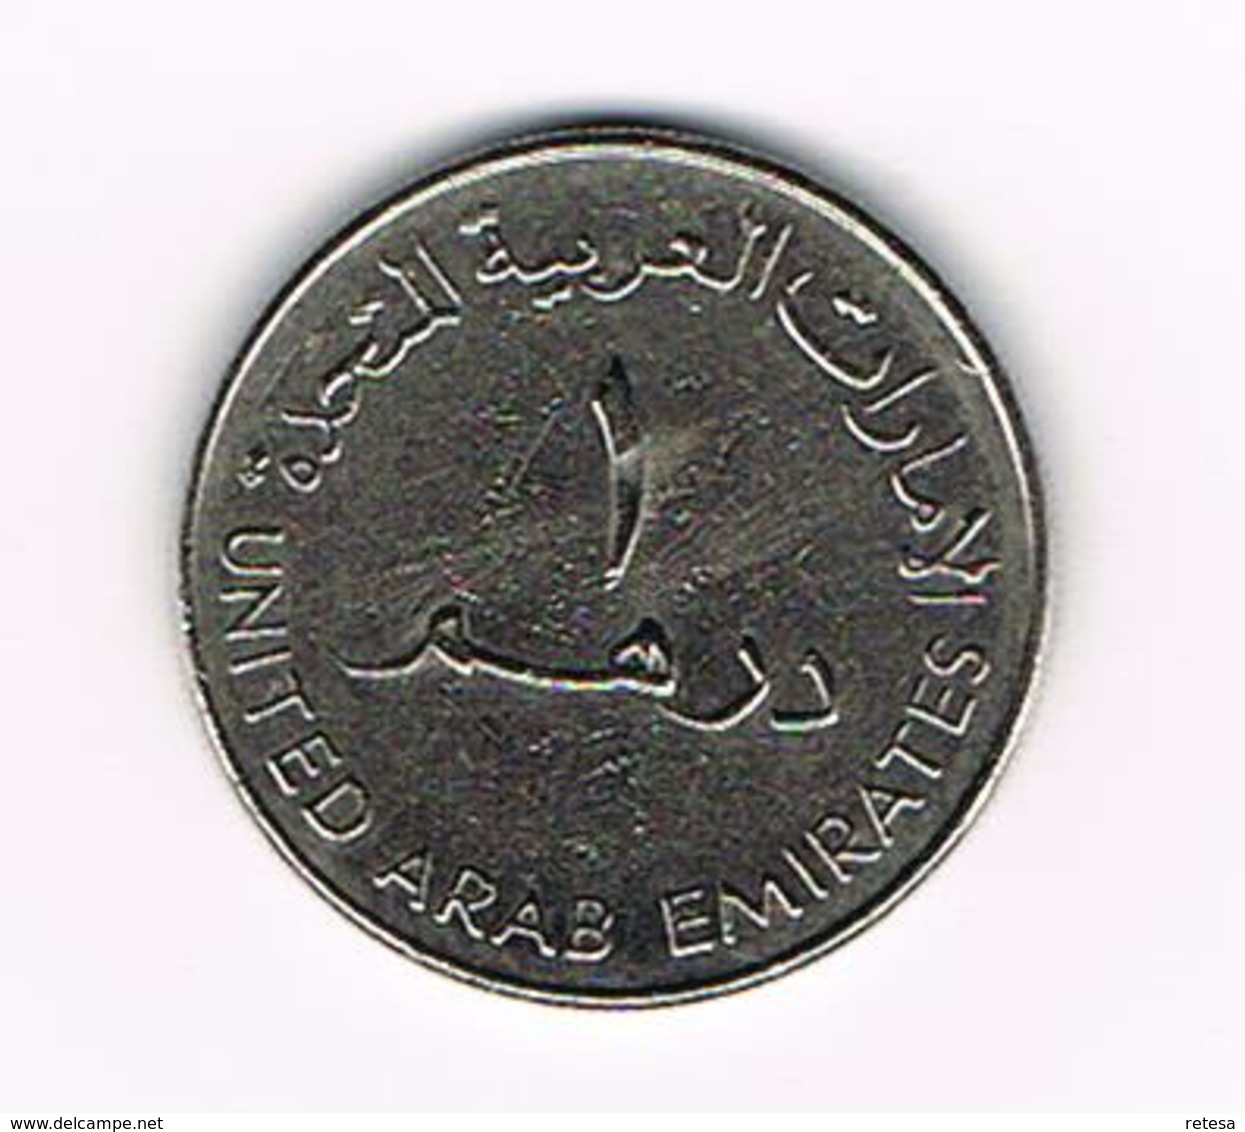 /  UNITED ARAB EMIRATES  1 DIRHAM 2005  REDUCED  SIZE - Emirats Arabes Unis